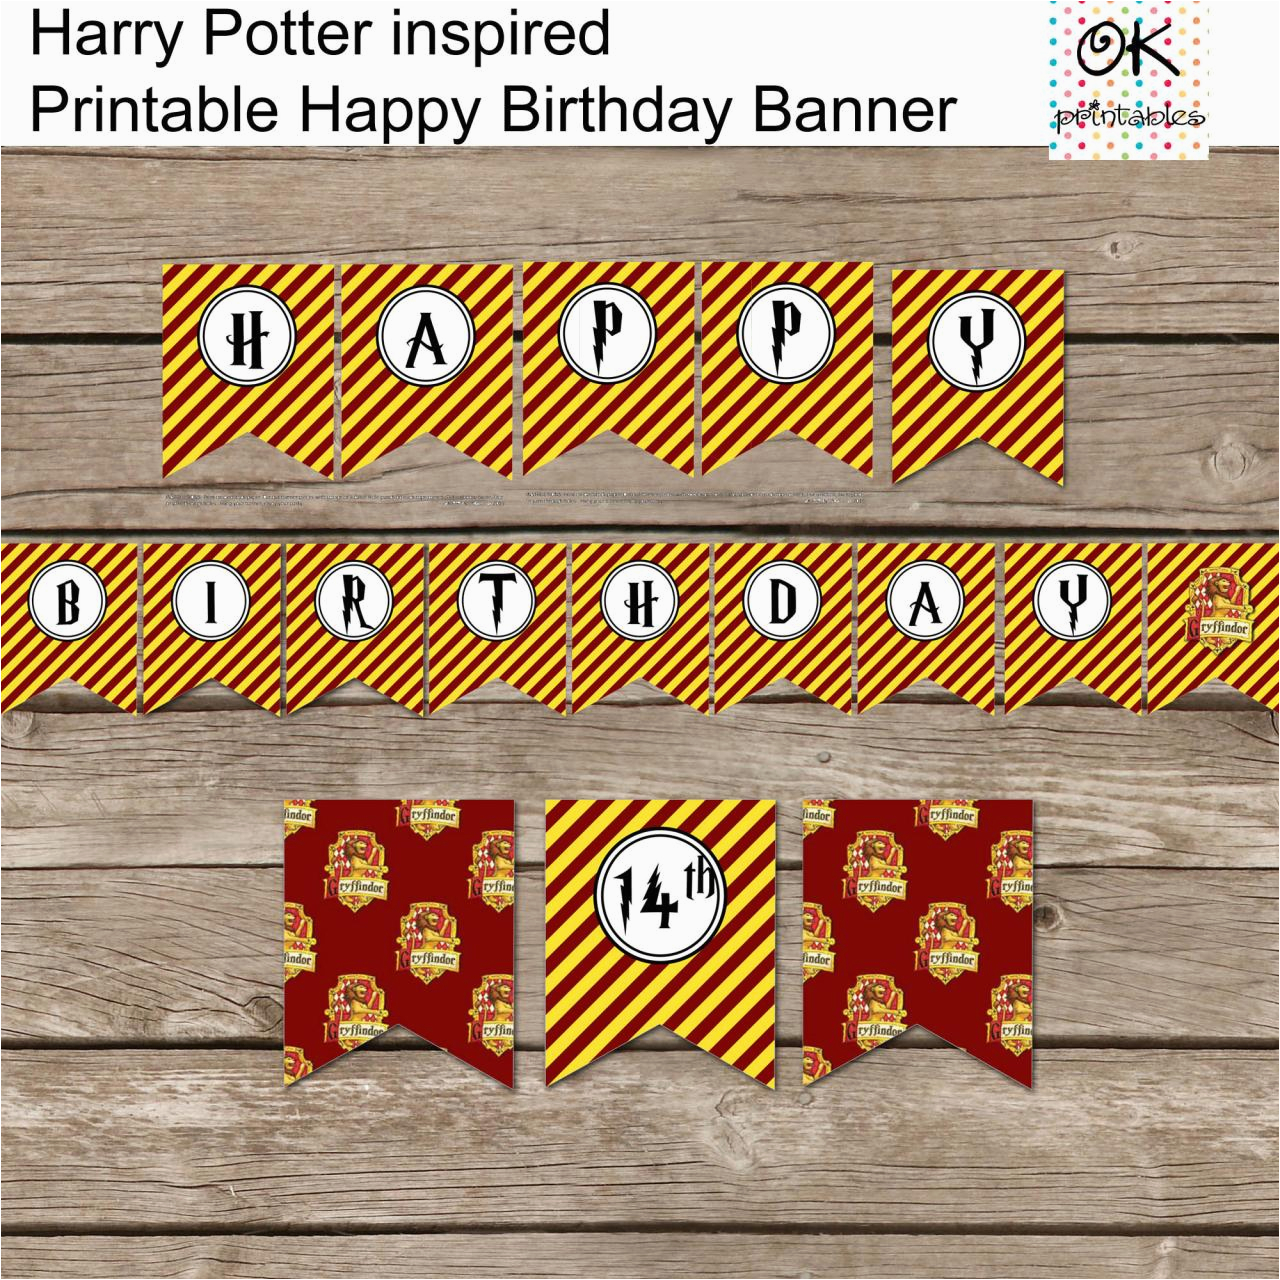 Harry Potter Happy Birthday Banner Printable Free Harry Potter Inspired Happy Birthday Banner Diy Harry